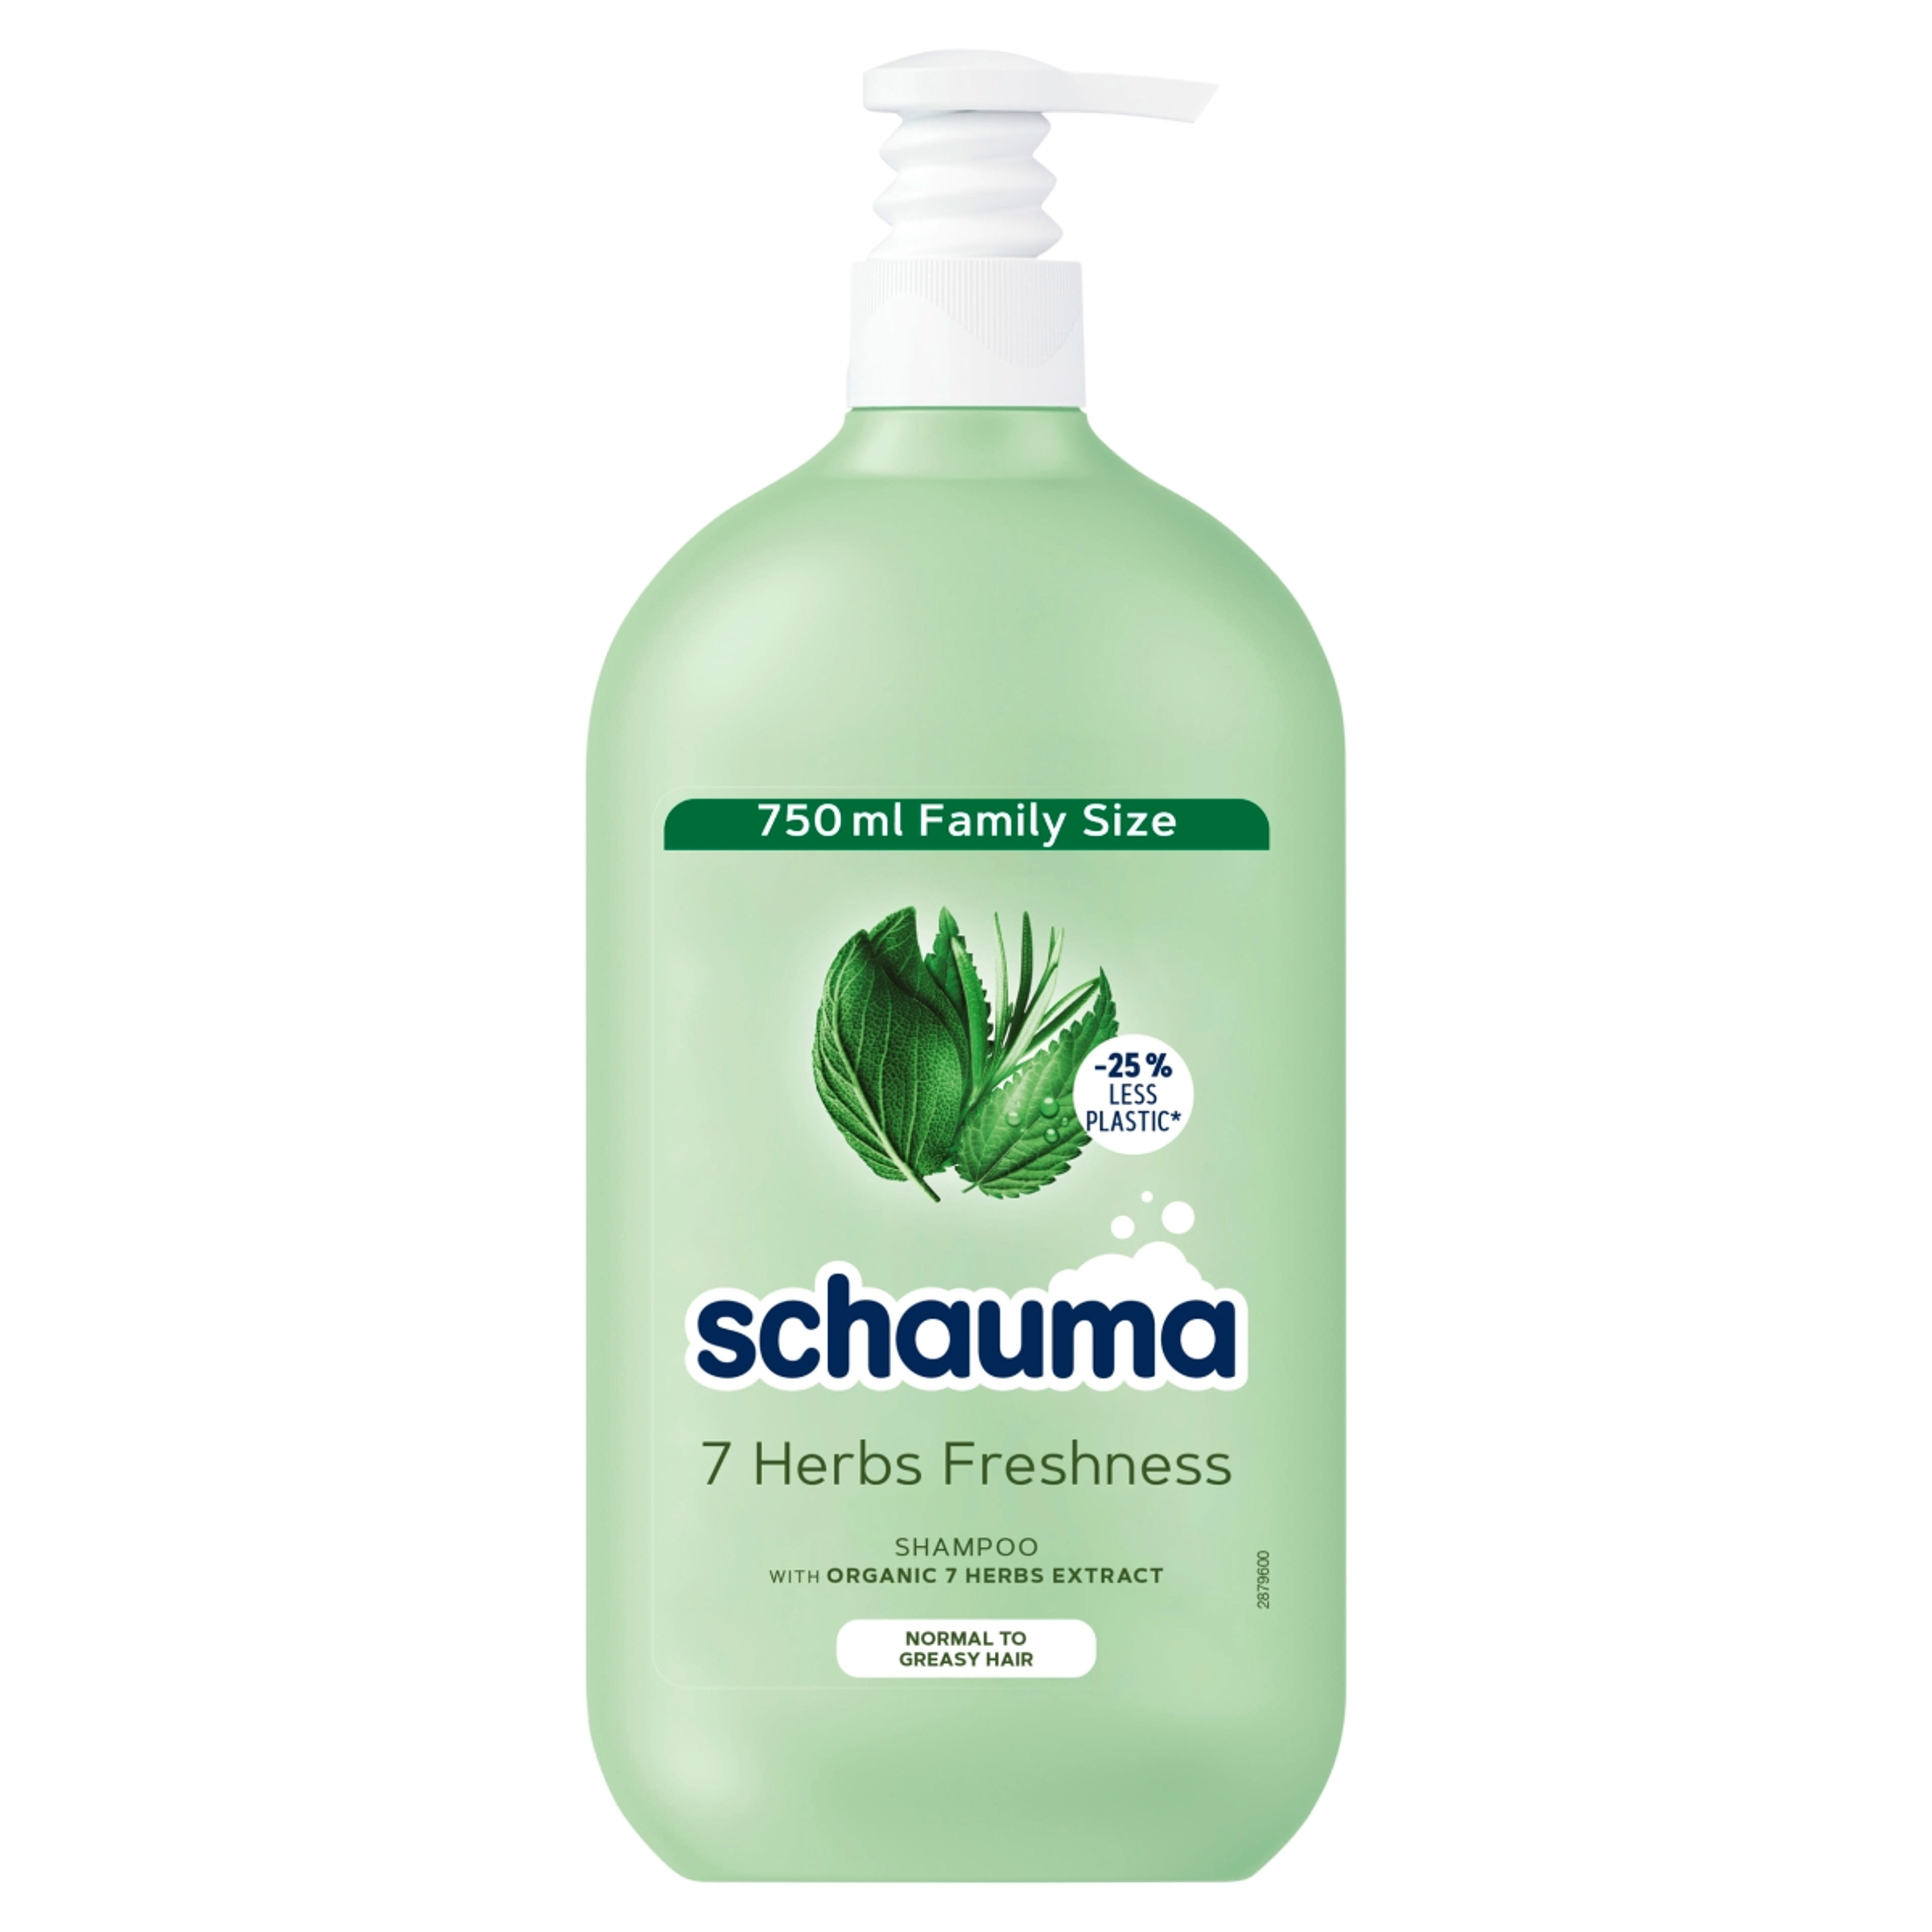 Schauma 7 gyógynövény frissesség sampon - 750 ml